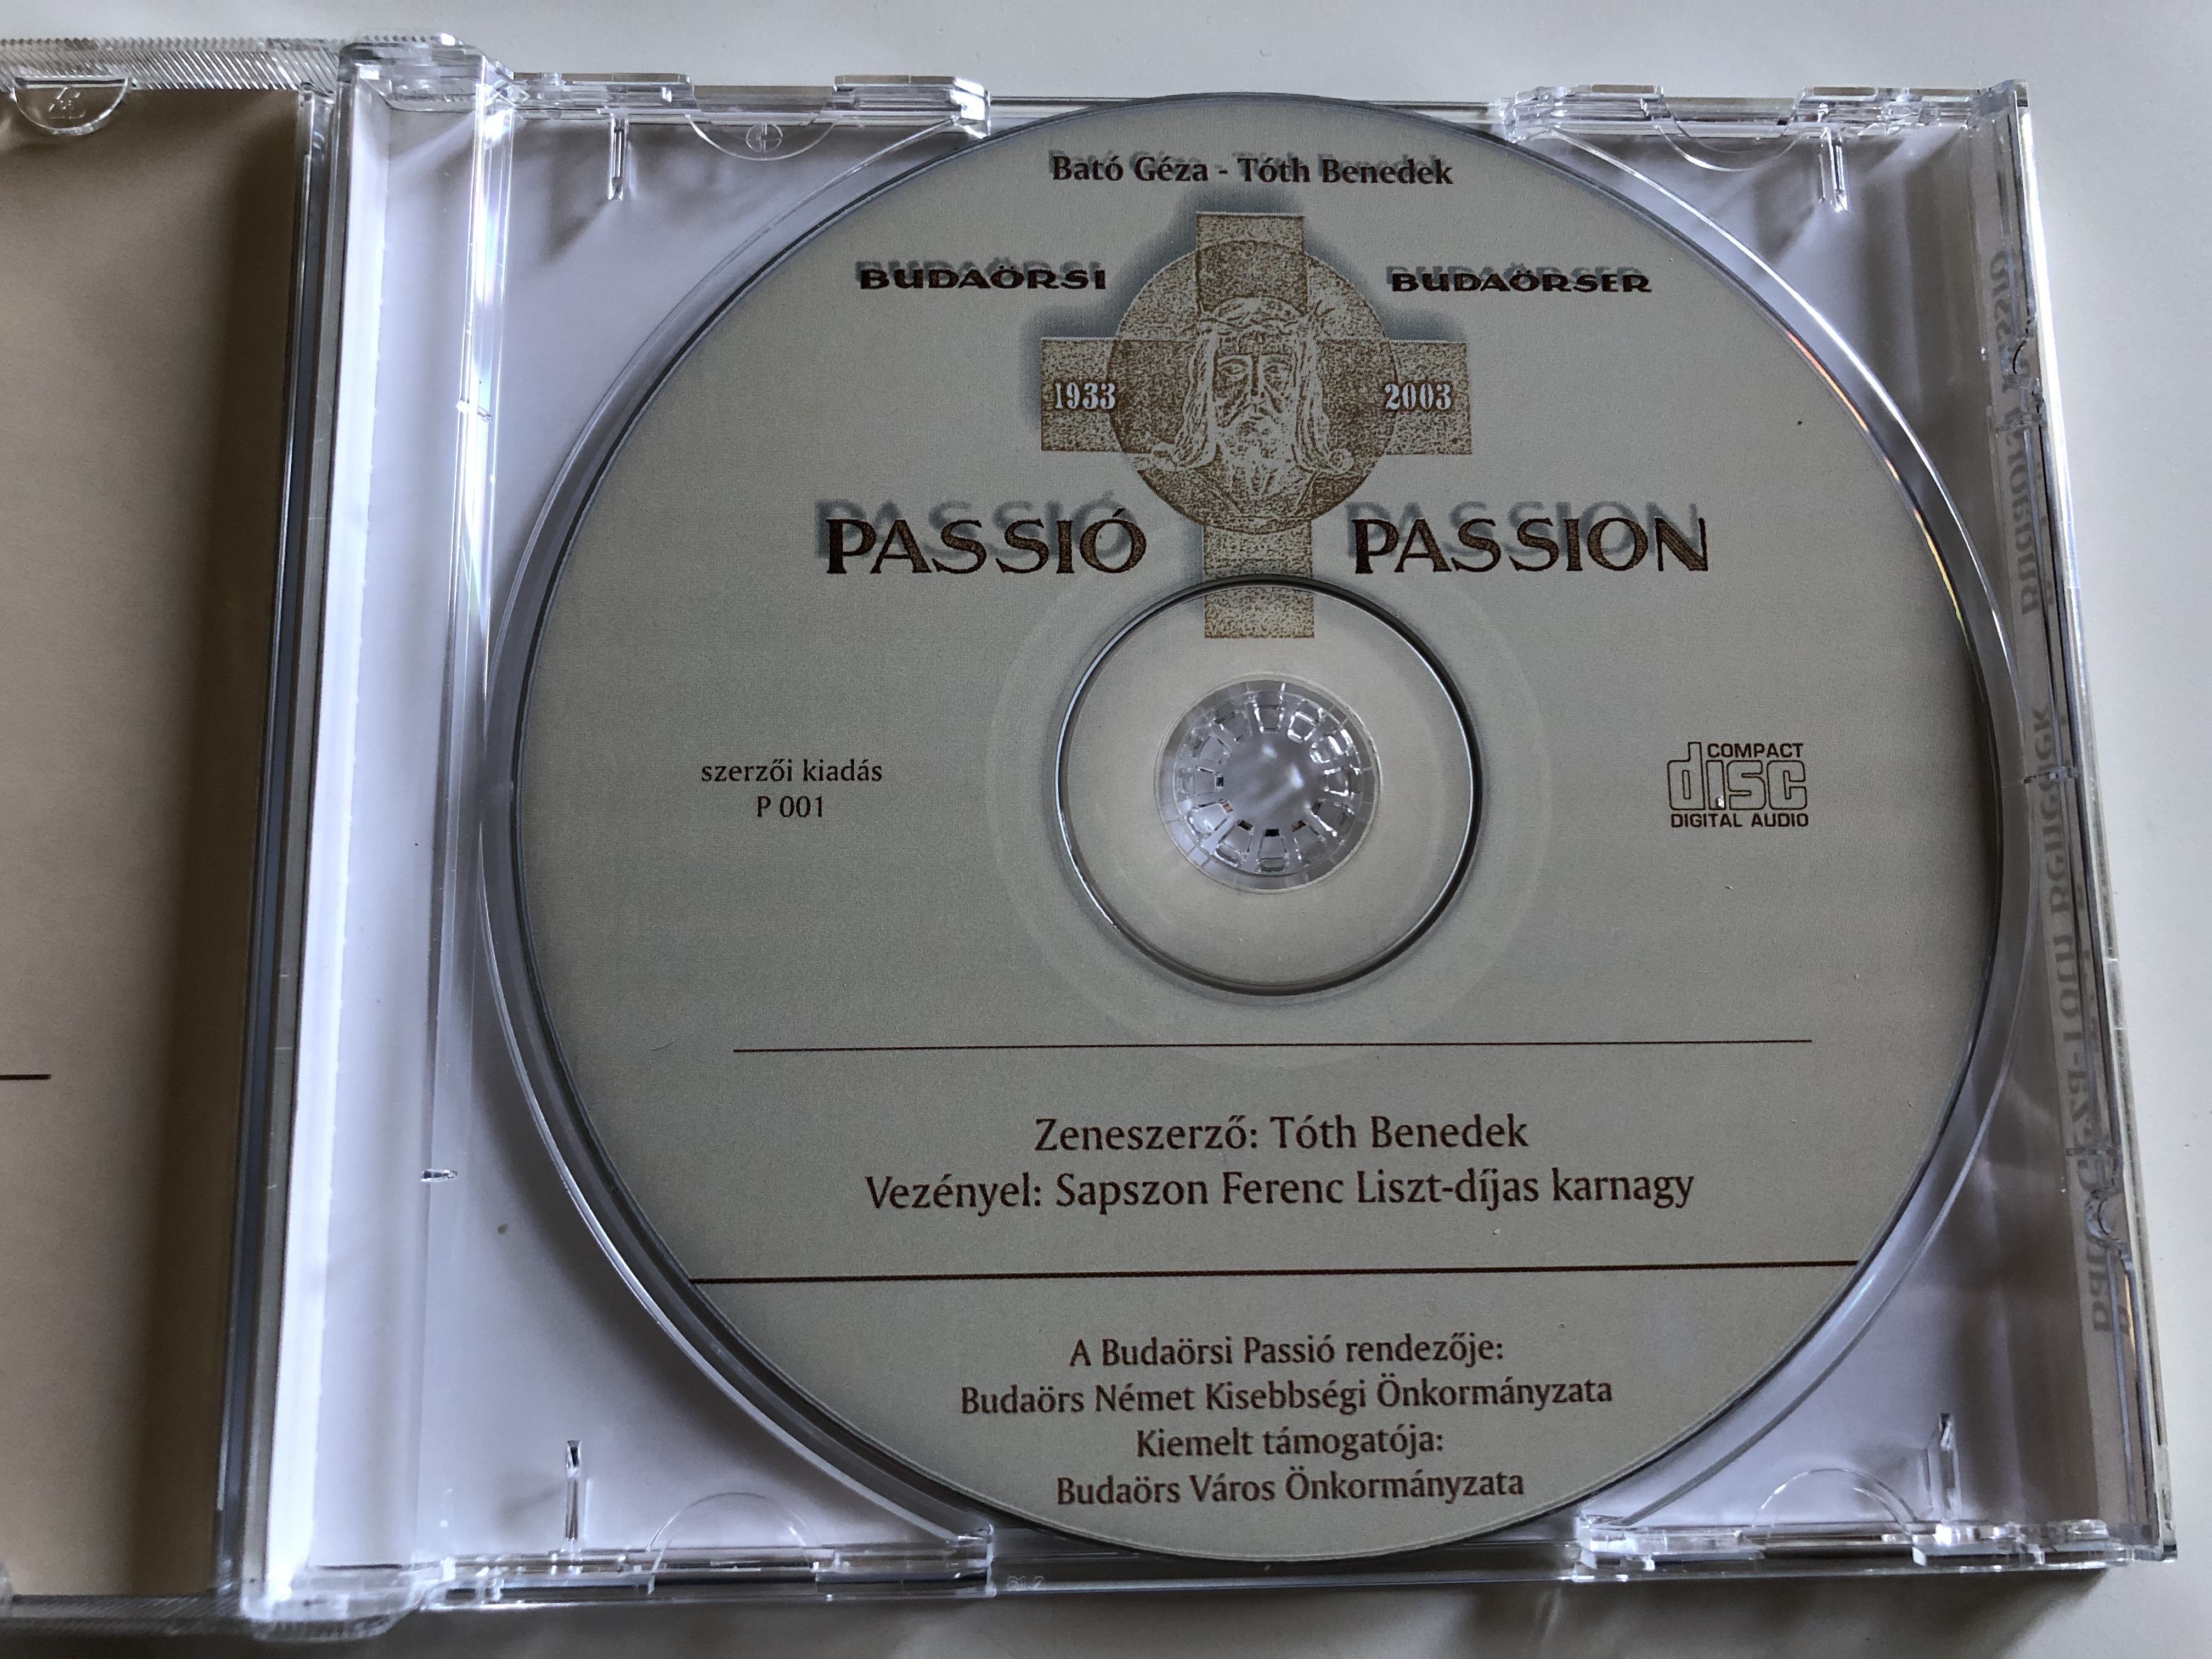 bato-geza-toth-benedek-budaorsi-budaorser-passio-passion-conducted-toth-benedek-szerzoi-kiadas-audio-cd-p-001-3-.jpg